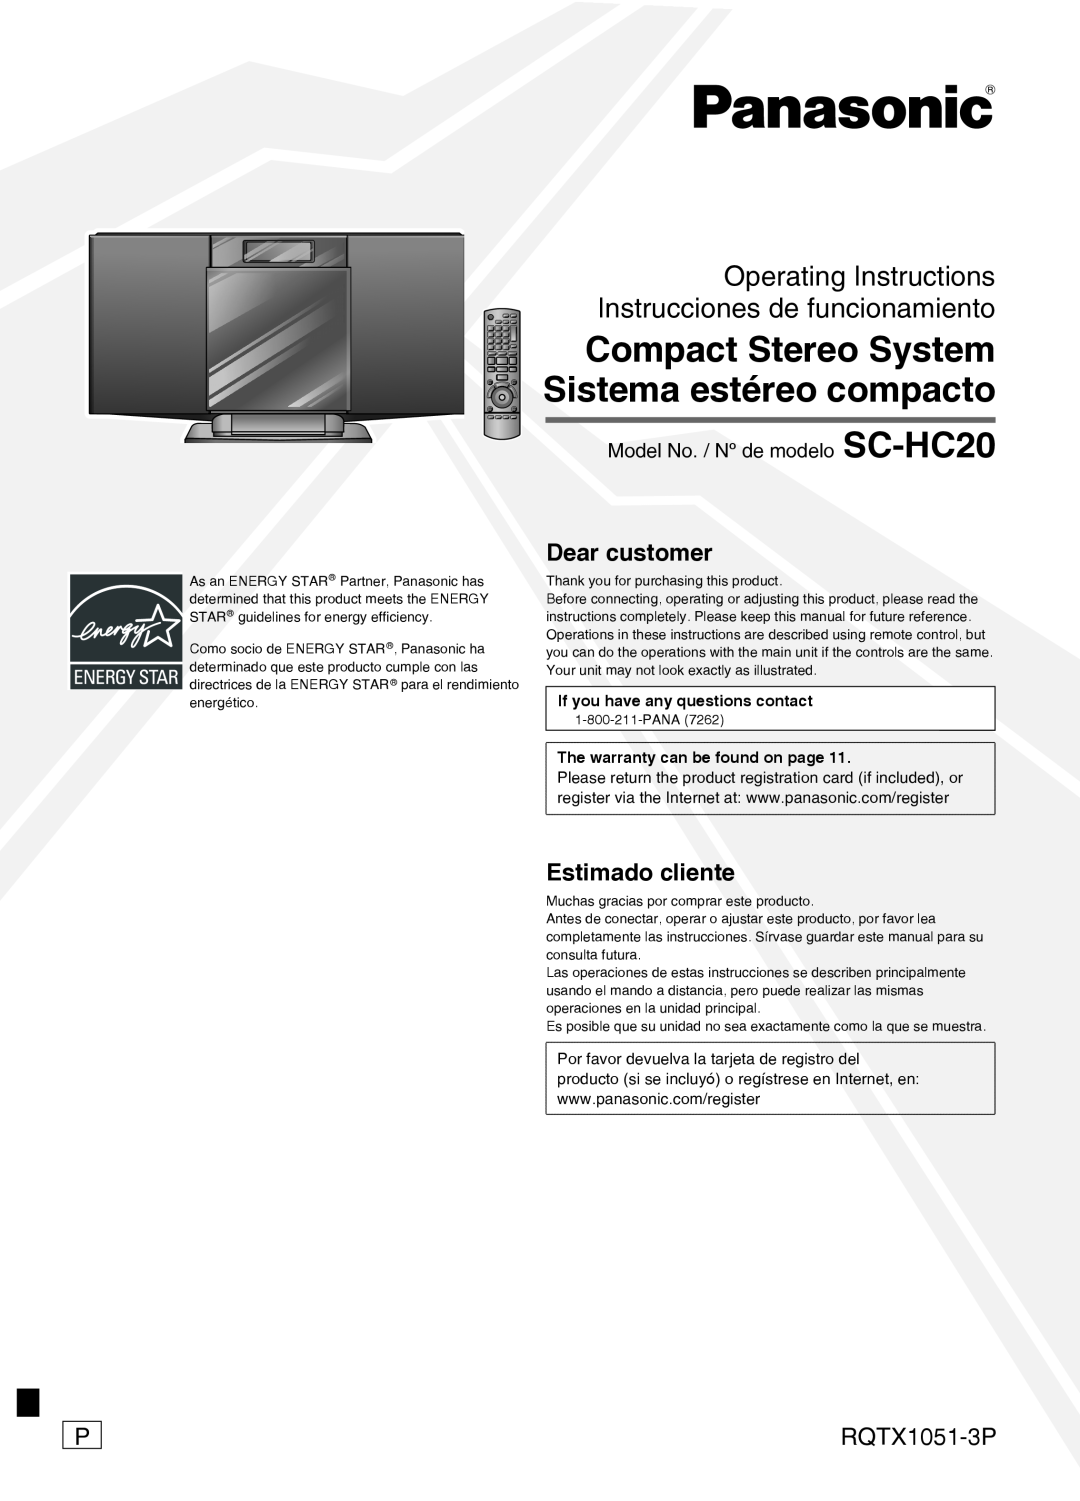 Panasonic SC-HC20 warranty Compact Stereo System Sistema estéreo compacto, RQTX1051-3P, Model No. / Nº de modelo 